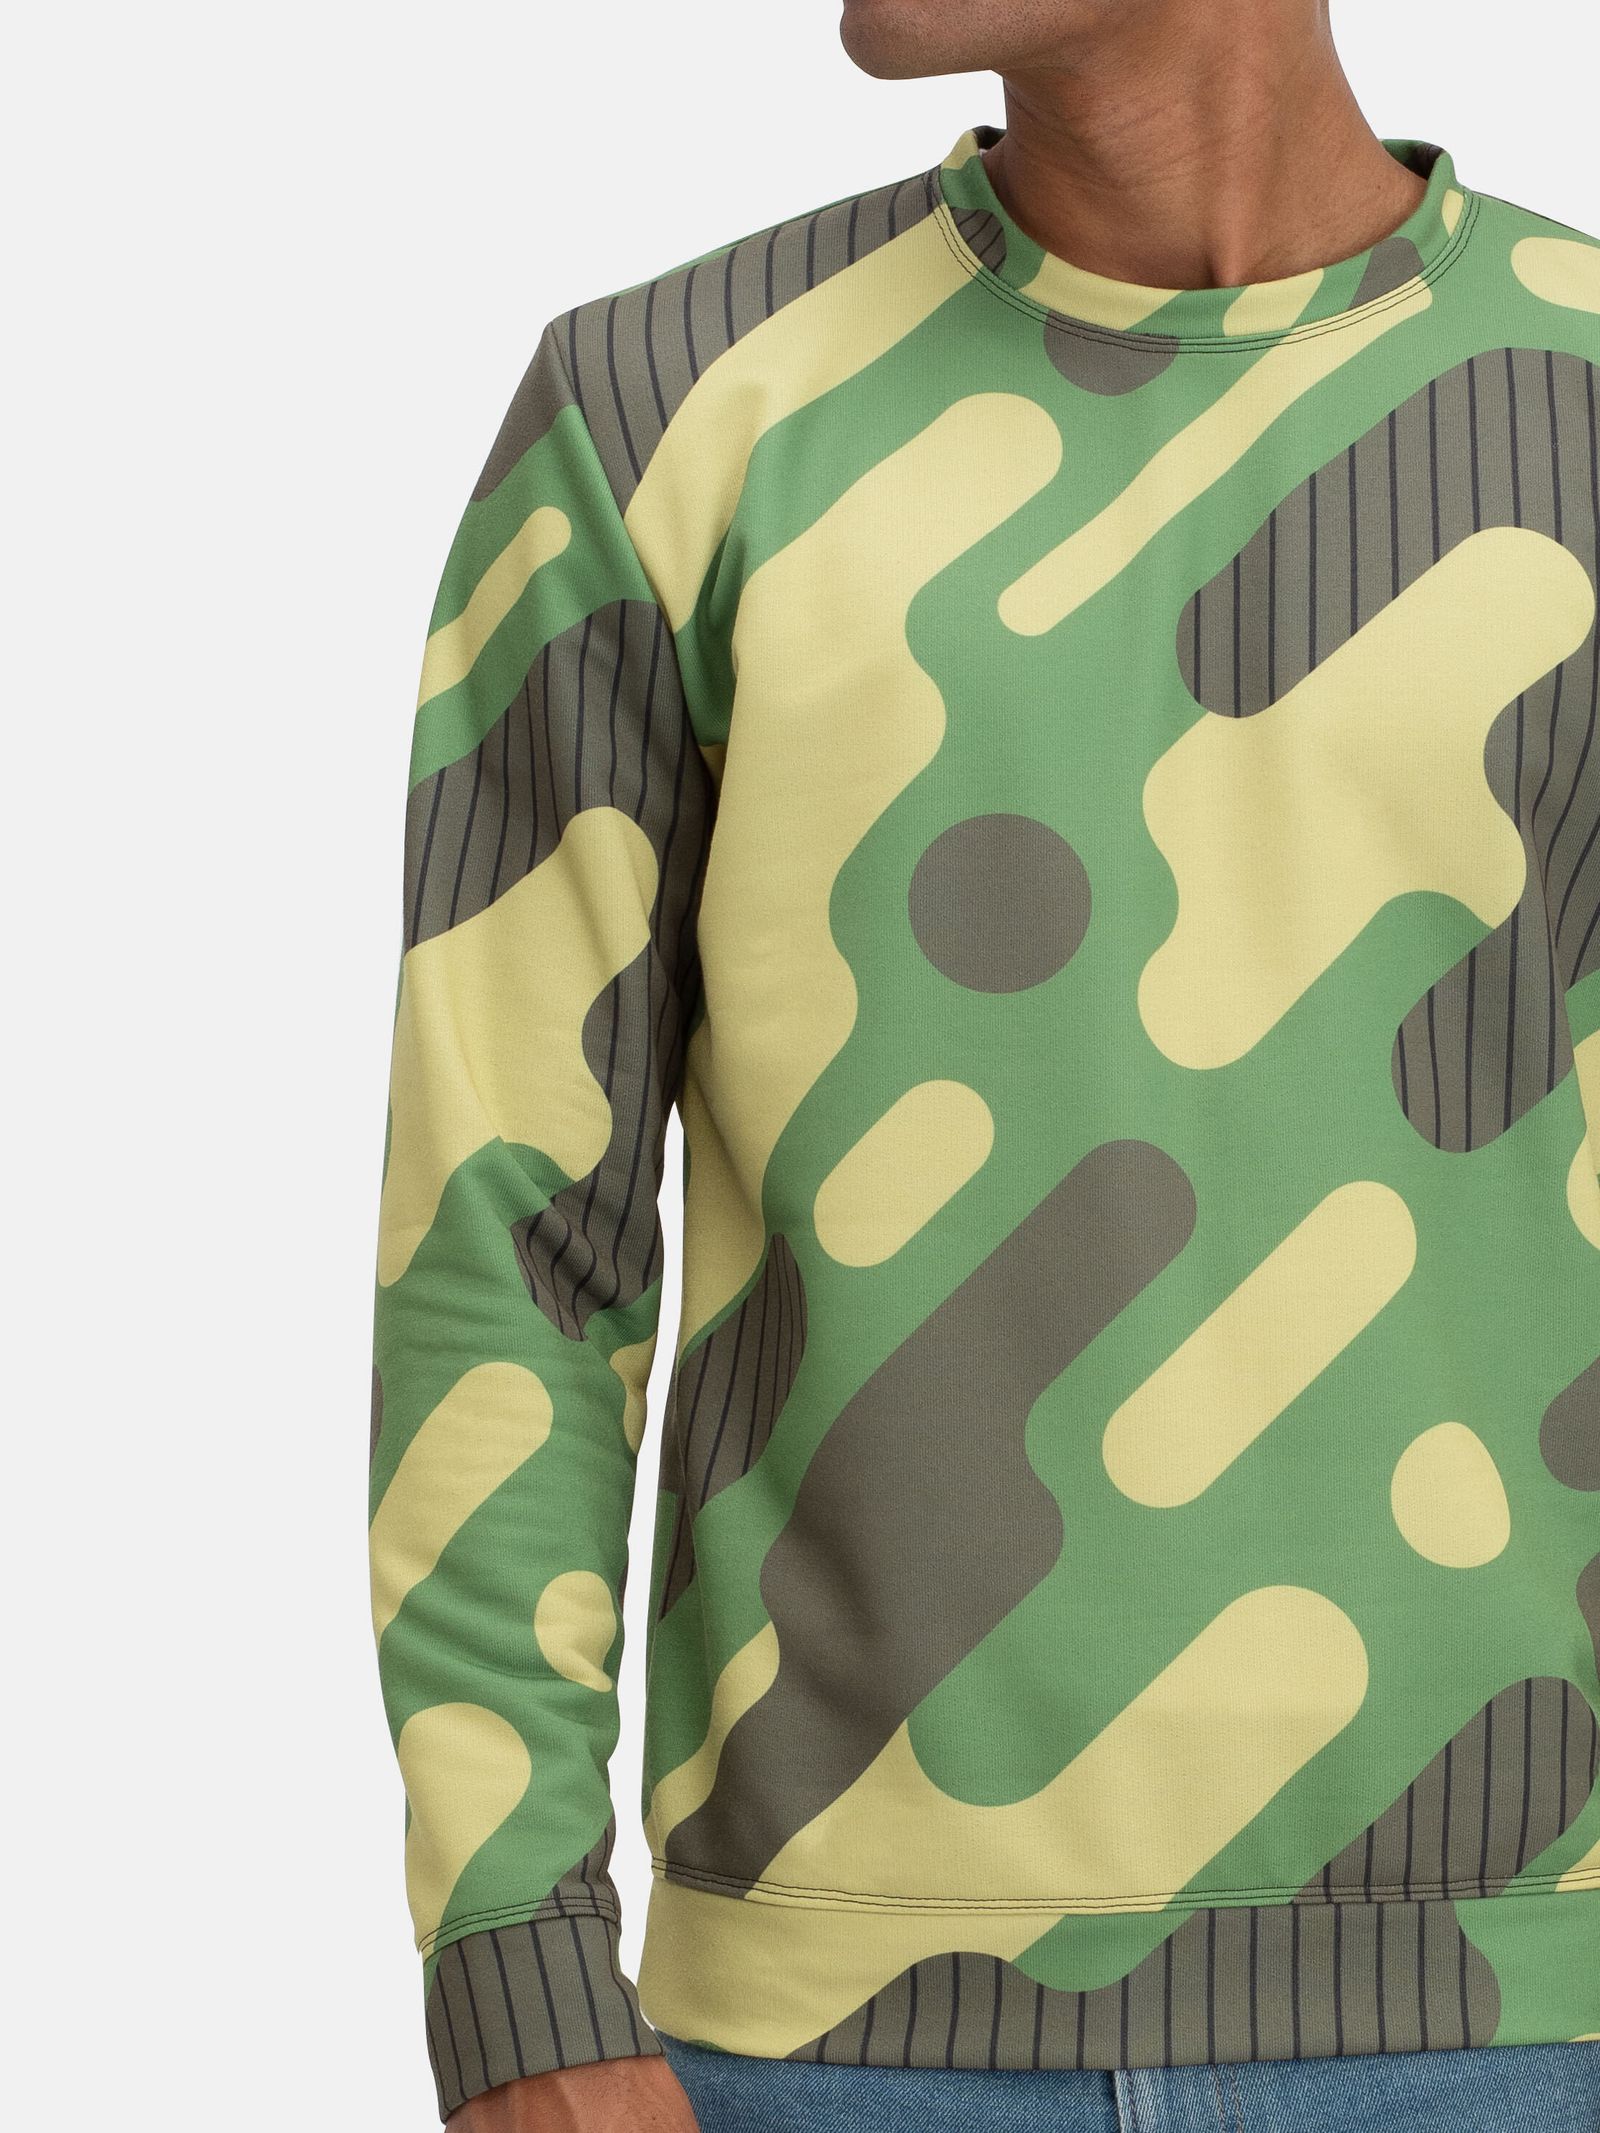 Custom Sweatshirt. Make Your Own Sweatshirts Online